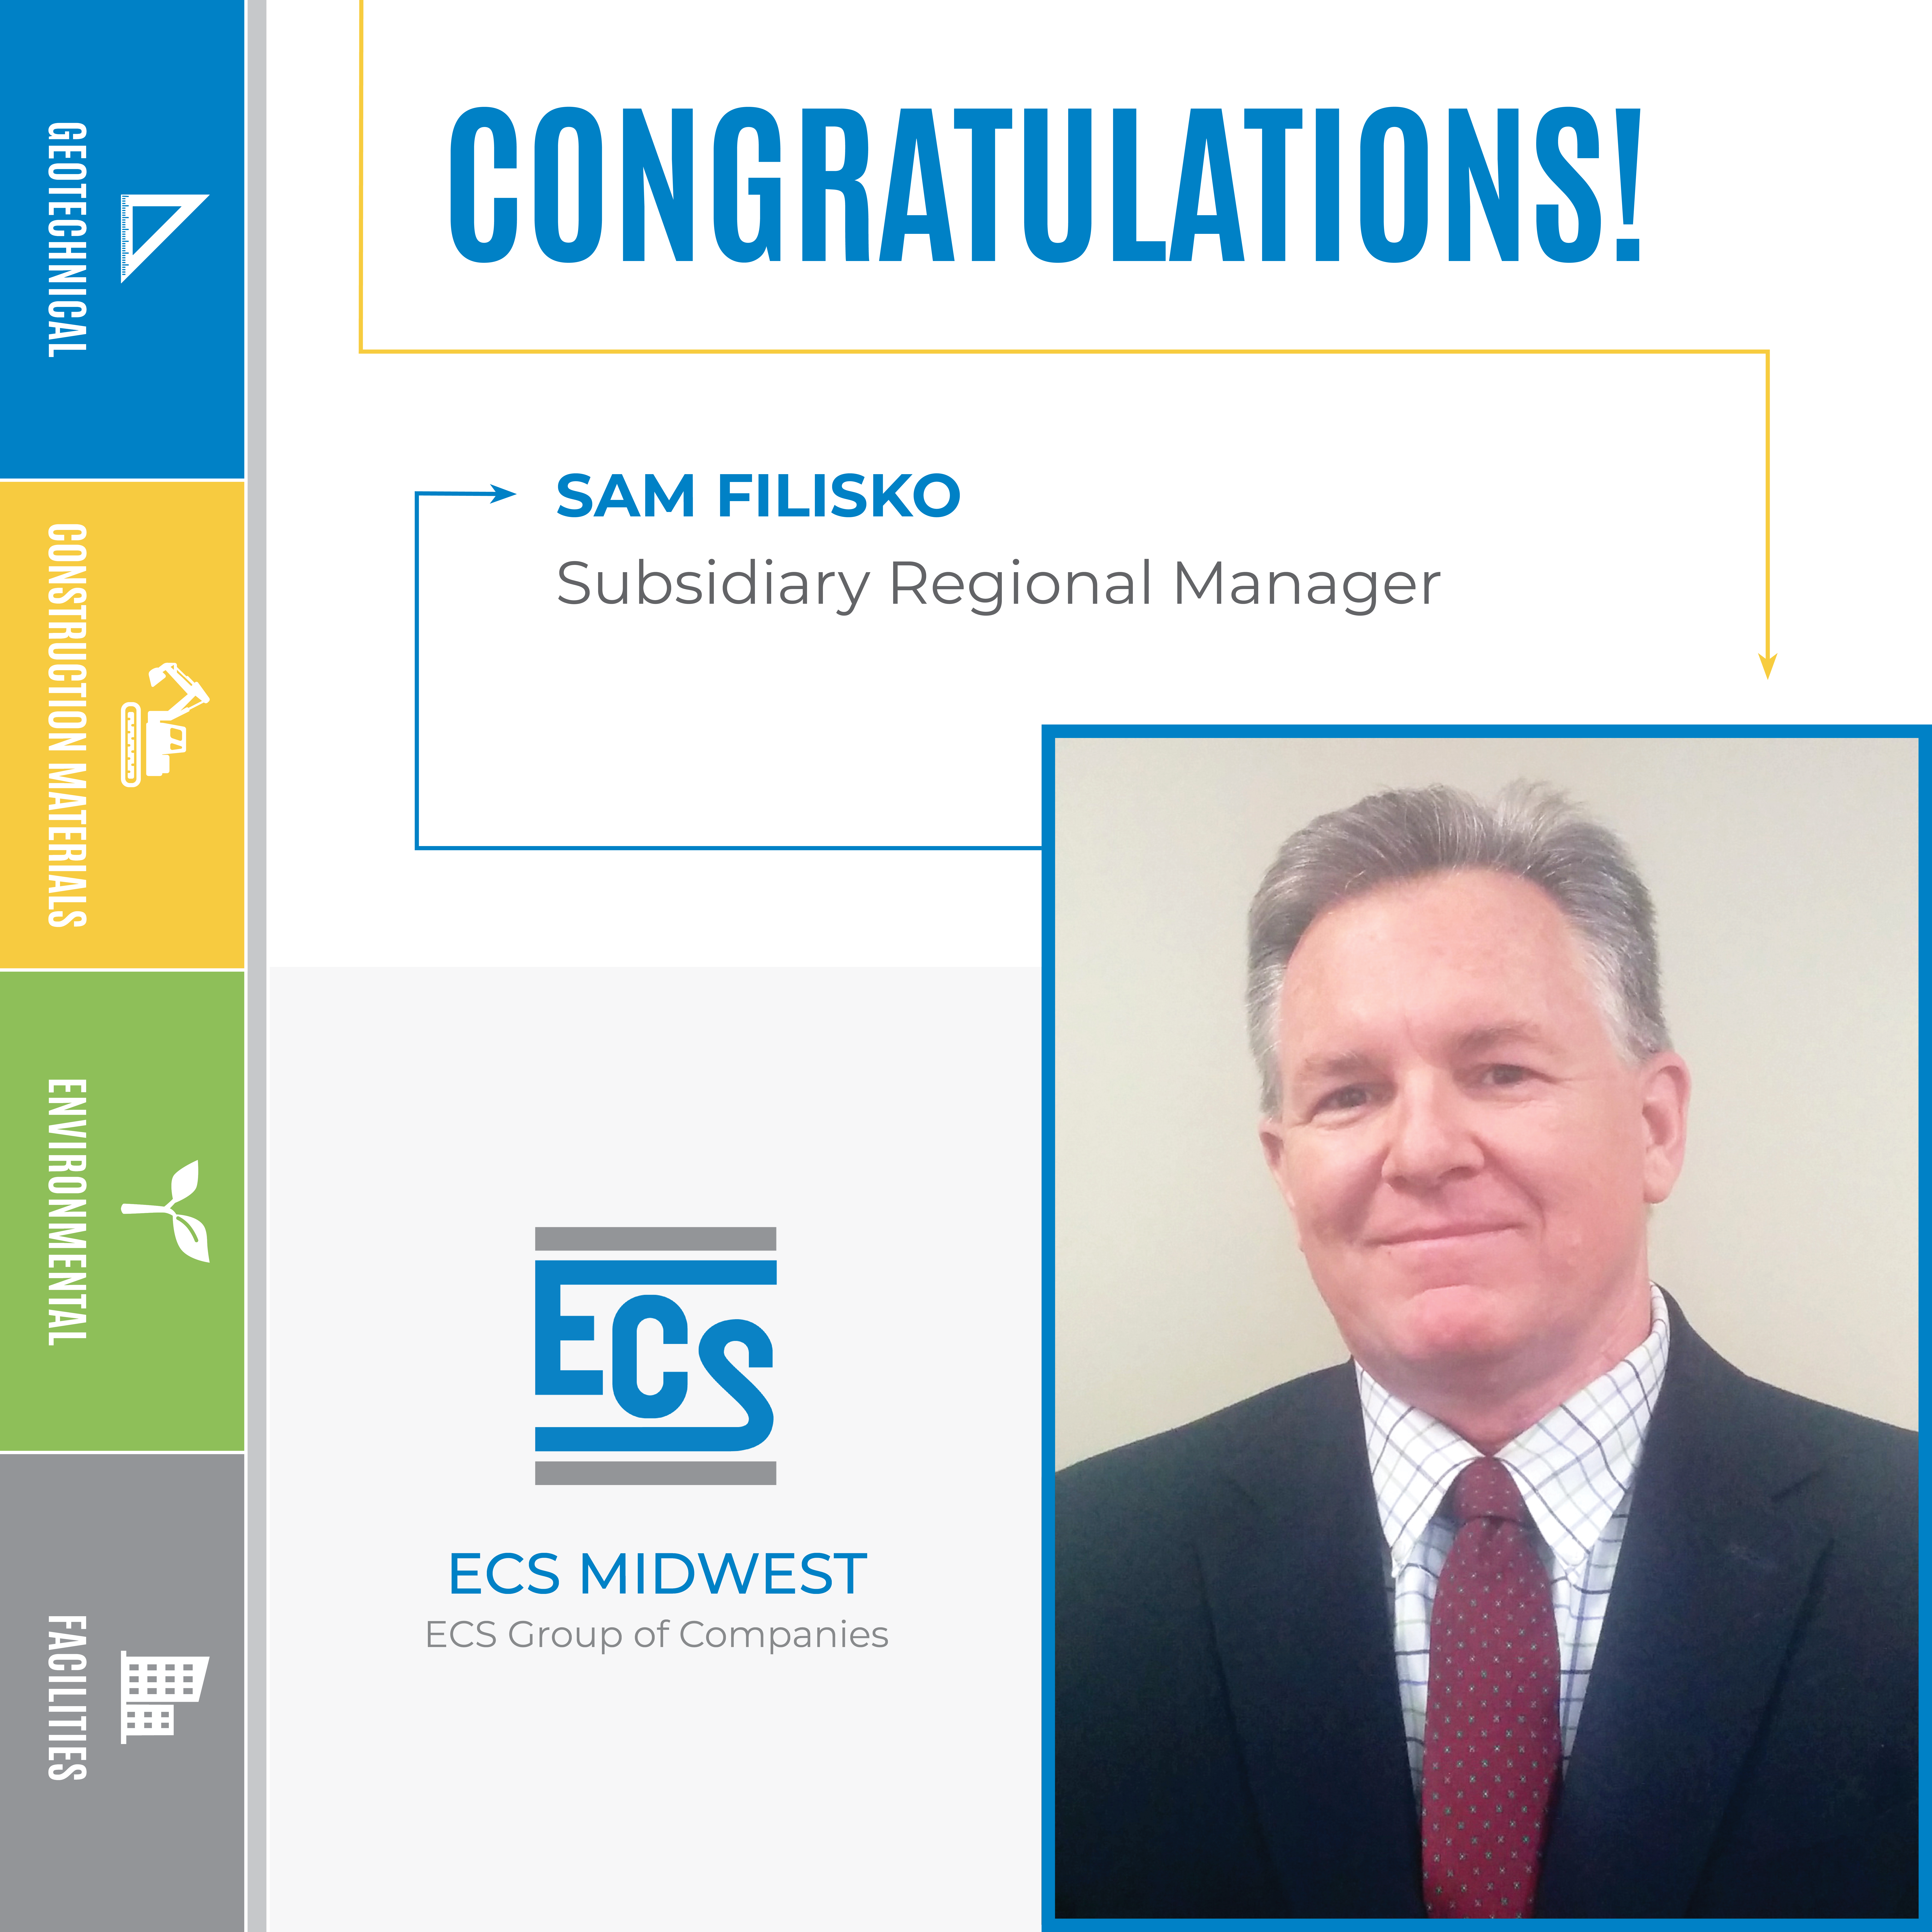 Graphic in ECS colors with ECS logo and headshot of Sam Filisko, Regional Manager